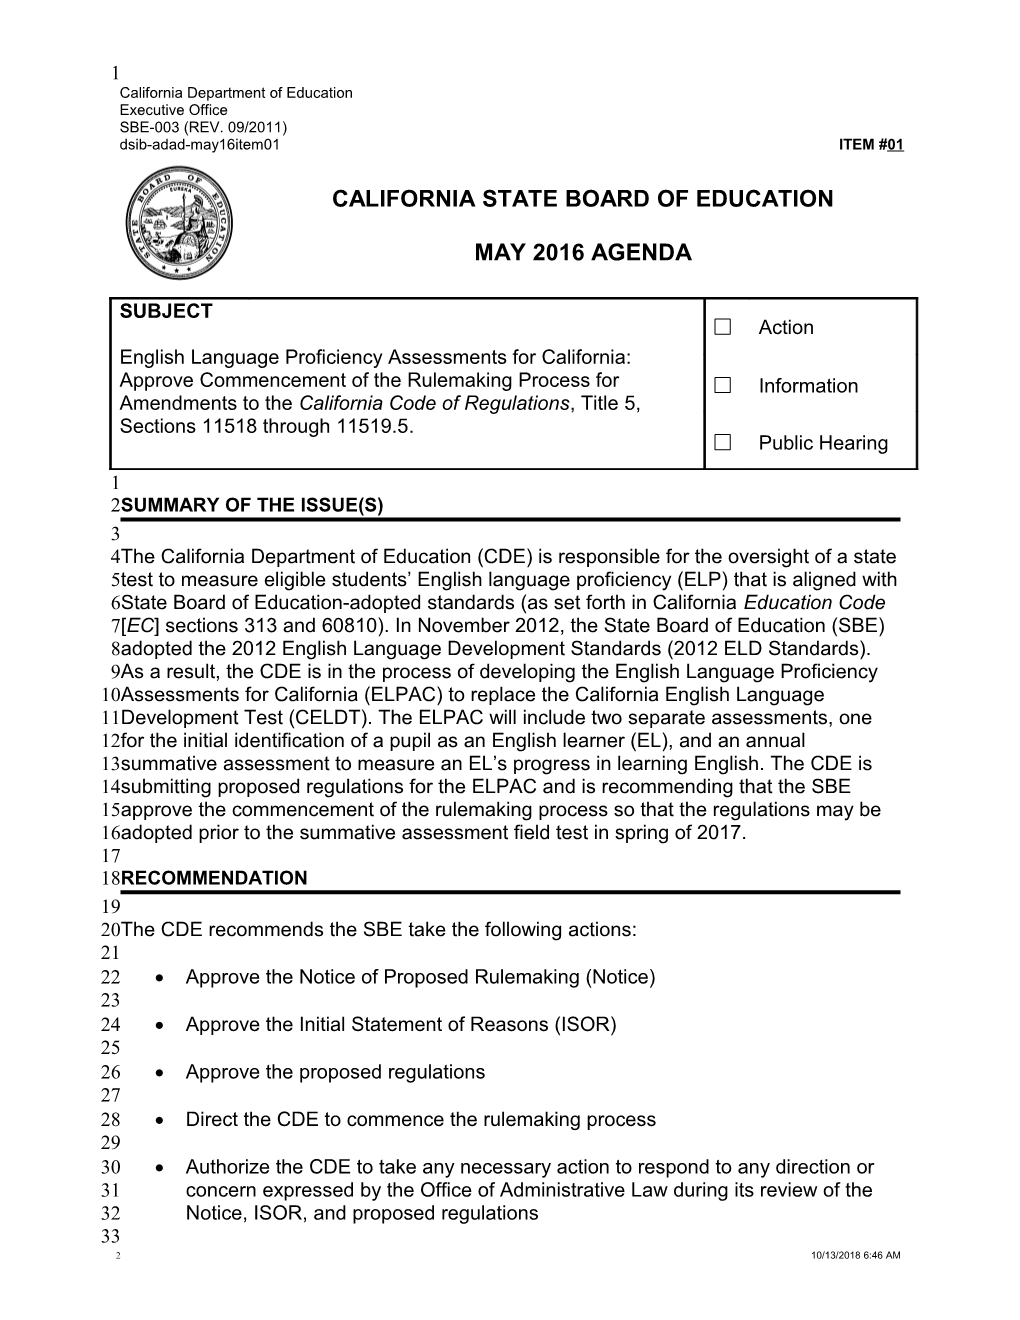 May 2016 Agenda Item 01 - Meeting Agendas (CA State Board of Education)